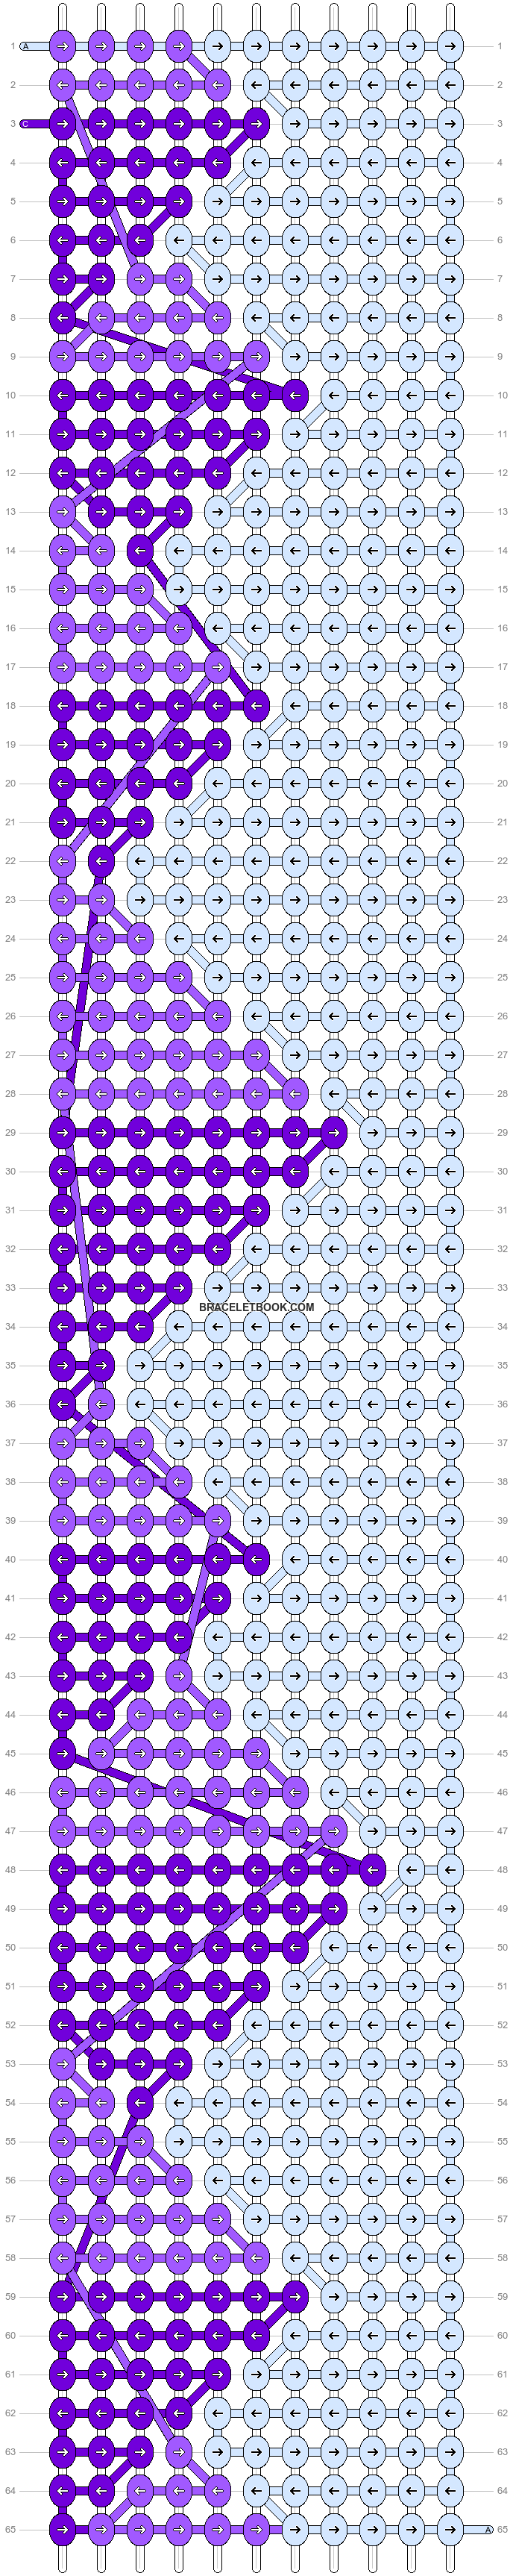 Alpha pattern #48336 variation #77432 pattern